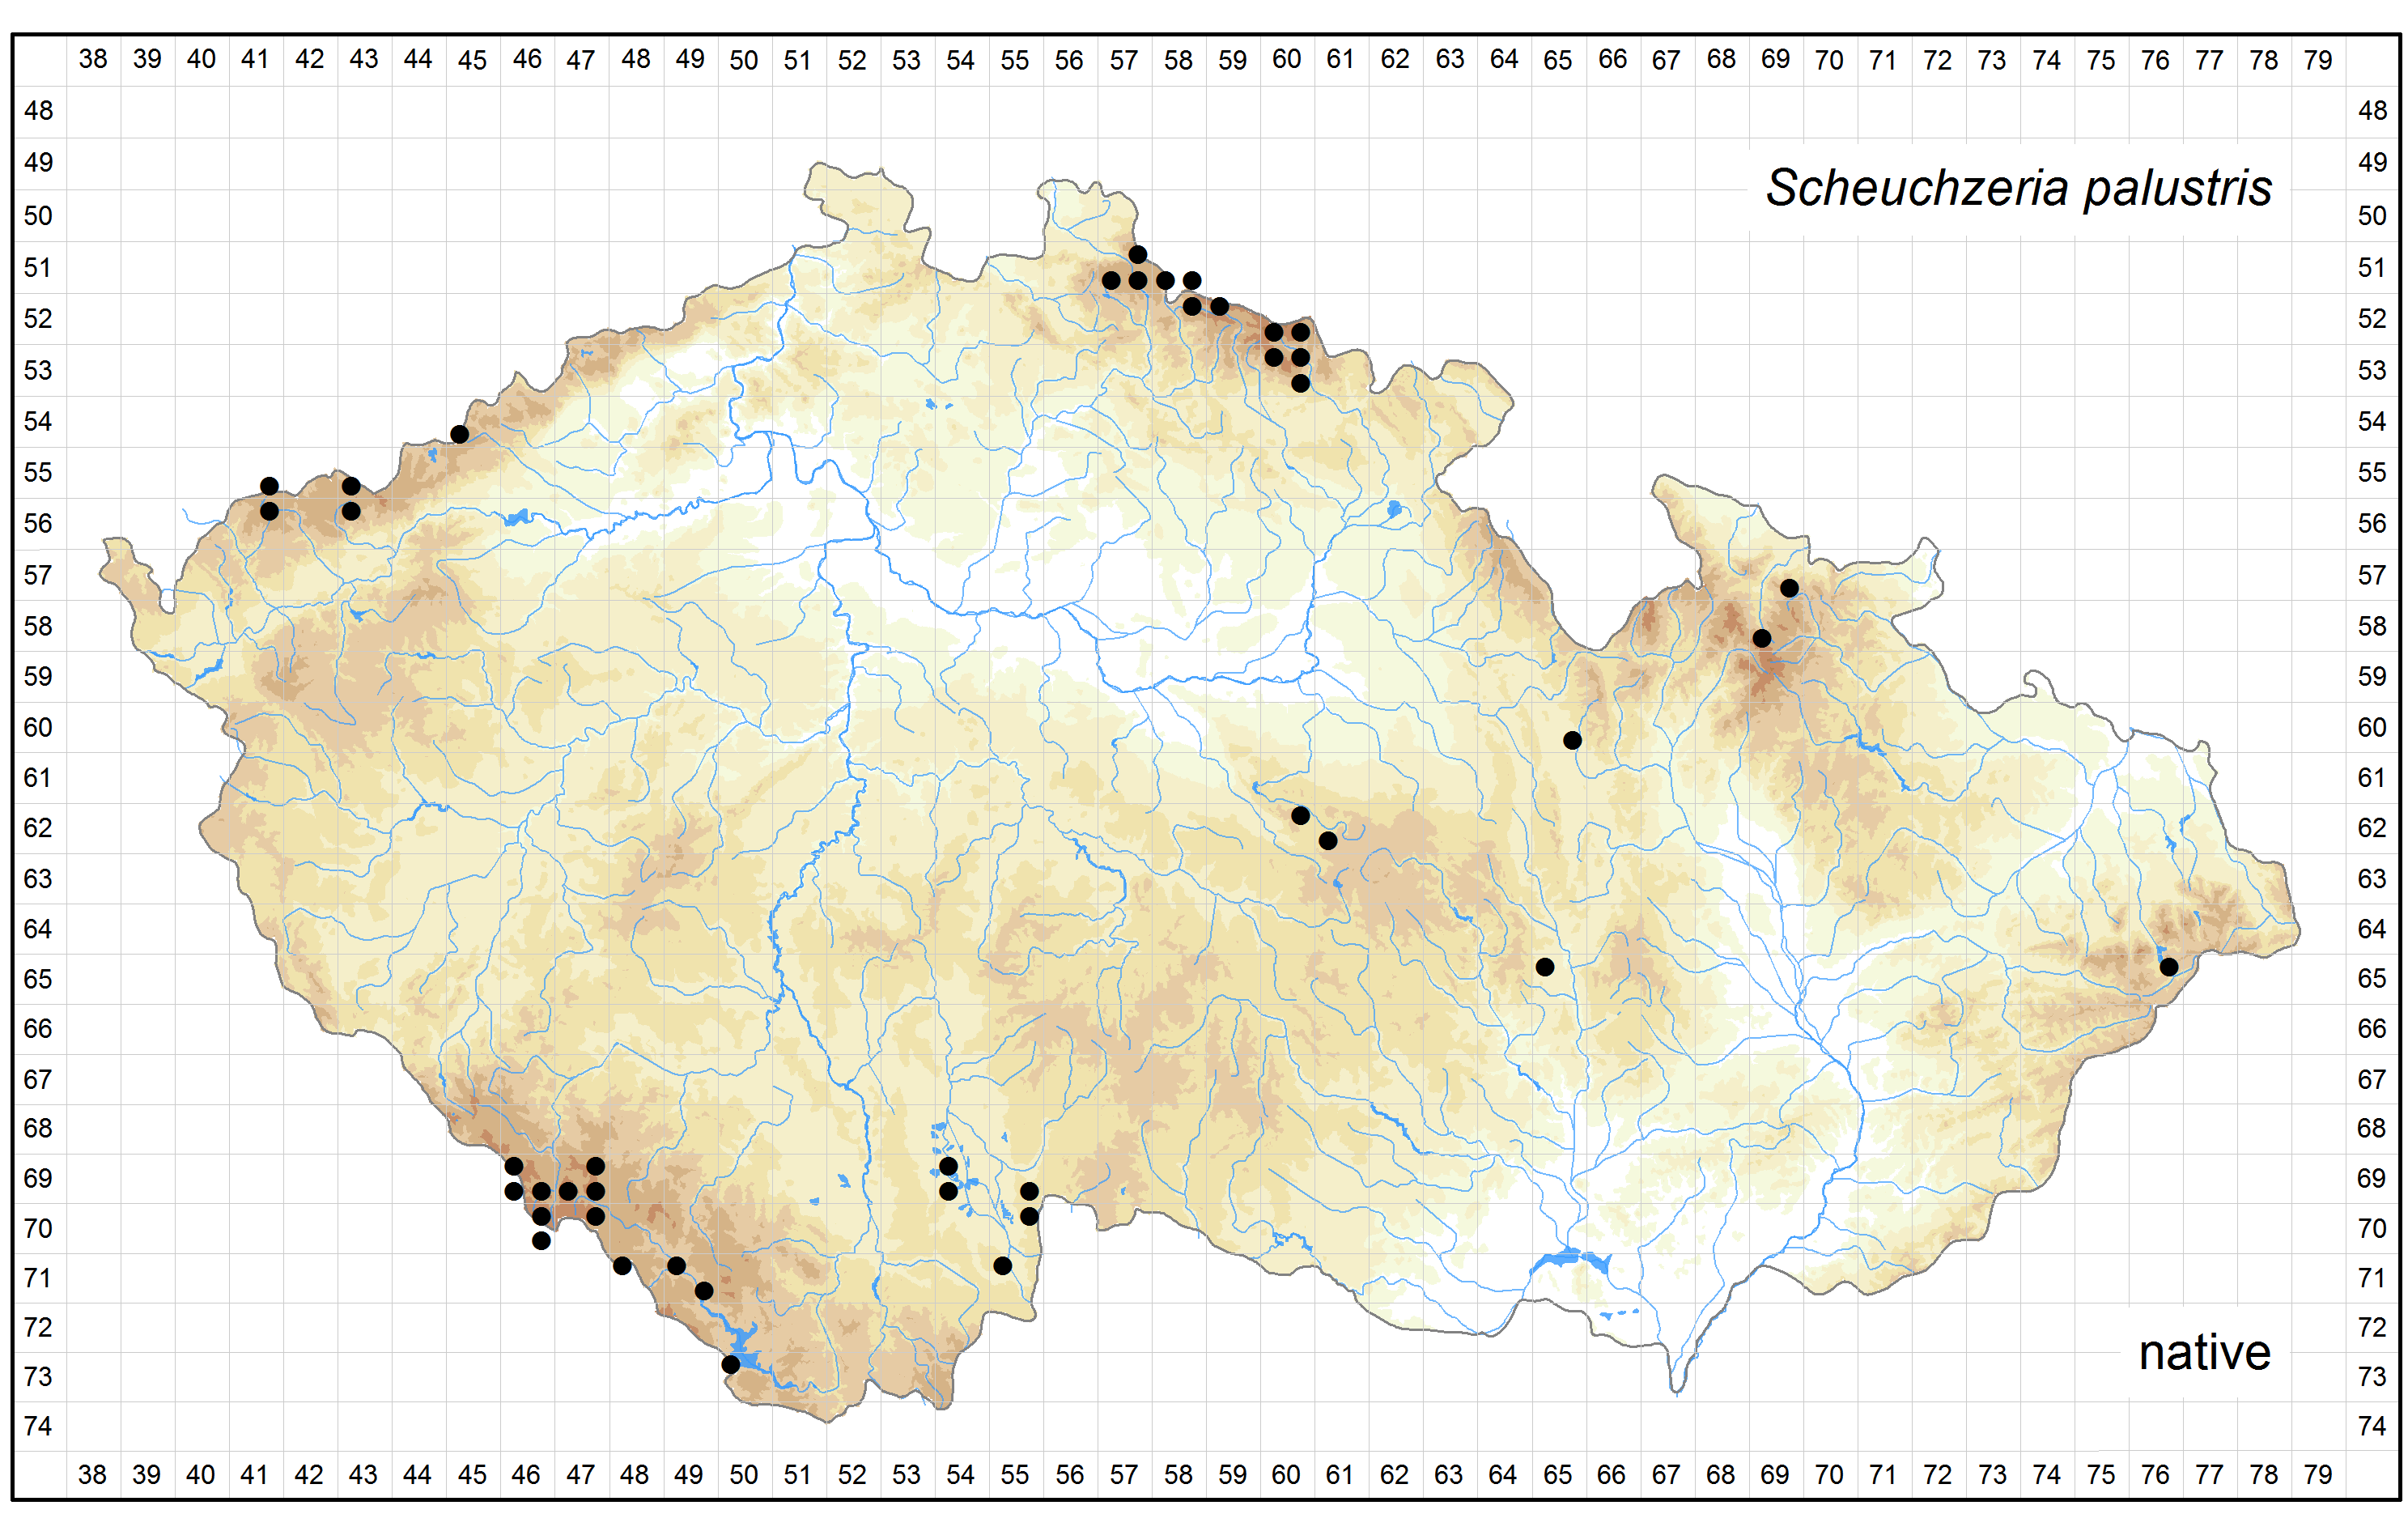 Distribution of Scheuchzeria palustris in the Czech Republic Author of the map: Jitka Štěpánková Map produced on: 18-11-2015 Database records used for producing the distribution map of Scheuchzeria